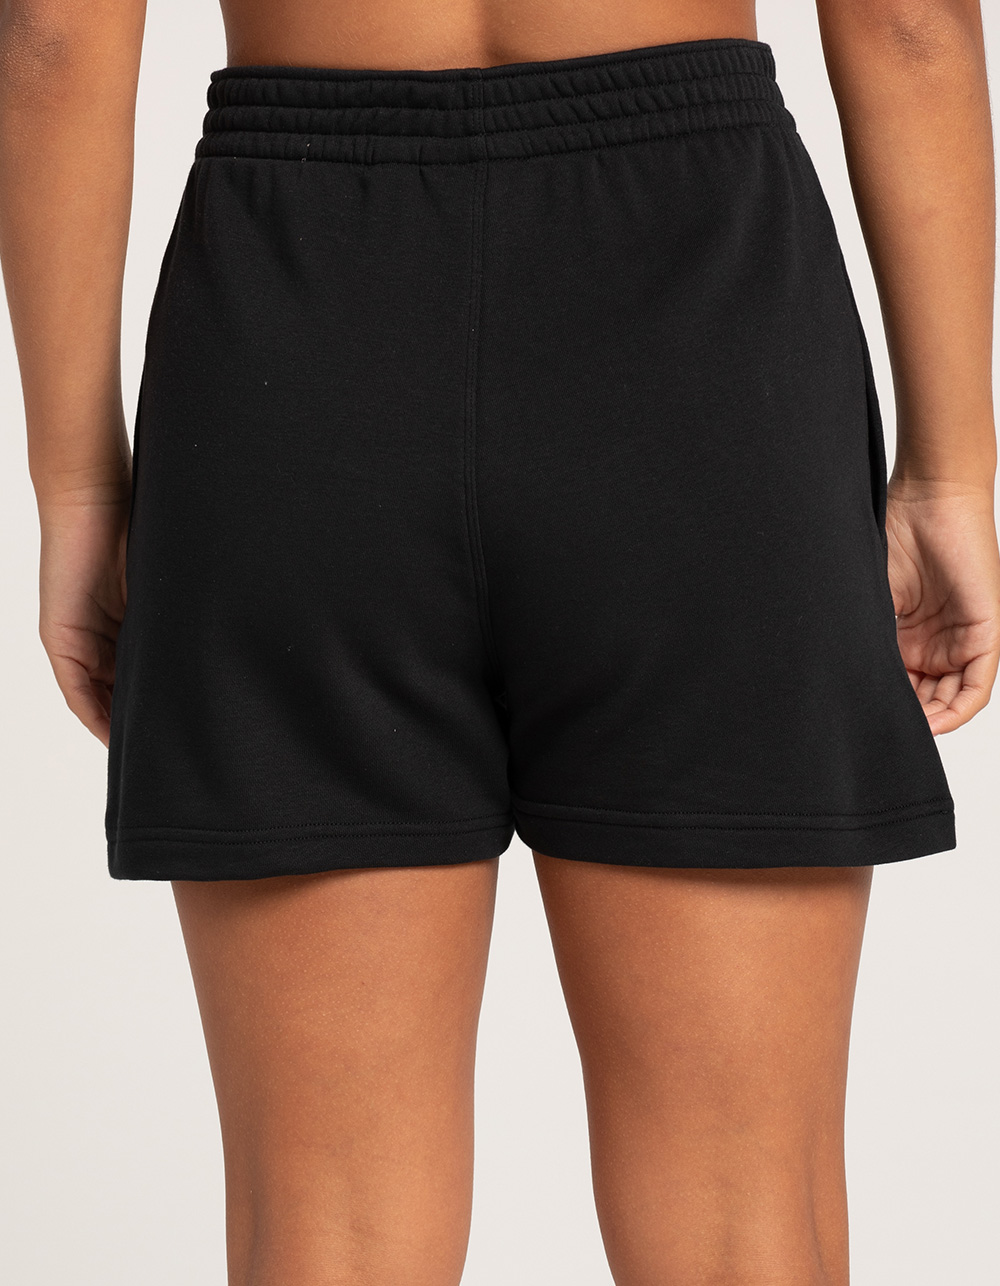 CONVERSE Chuck Taylor All Star Shorts Womens Knit Tillys BLACK | 